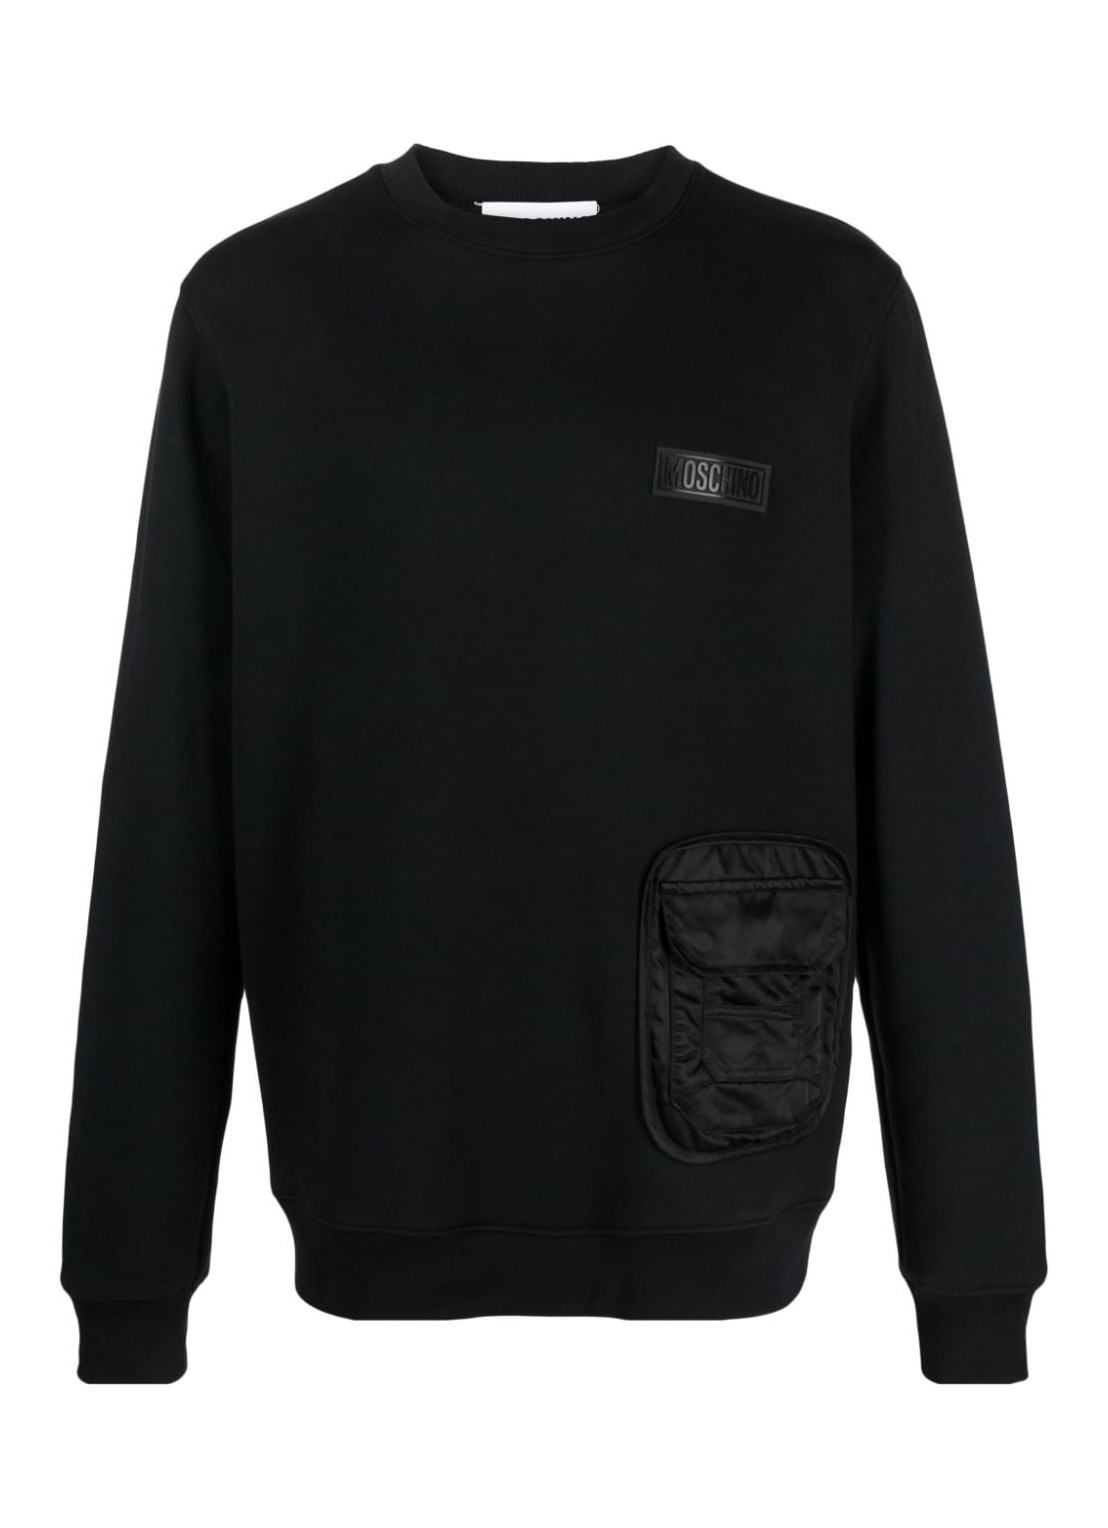 Sudadera moschino couture sweater man sweatshirt 17322026 j3555 talla negro
 